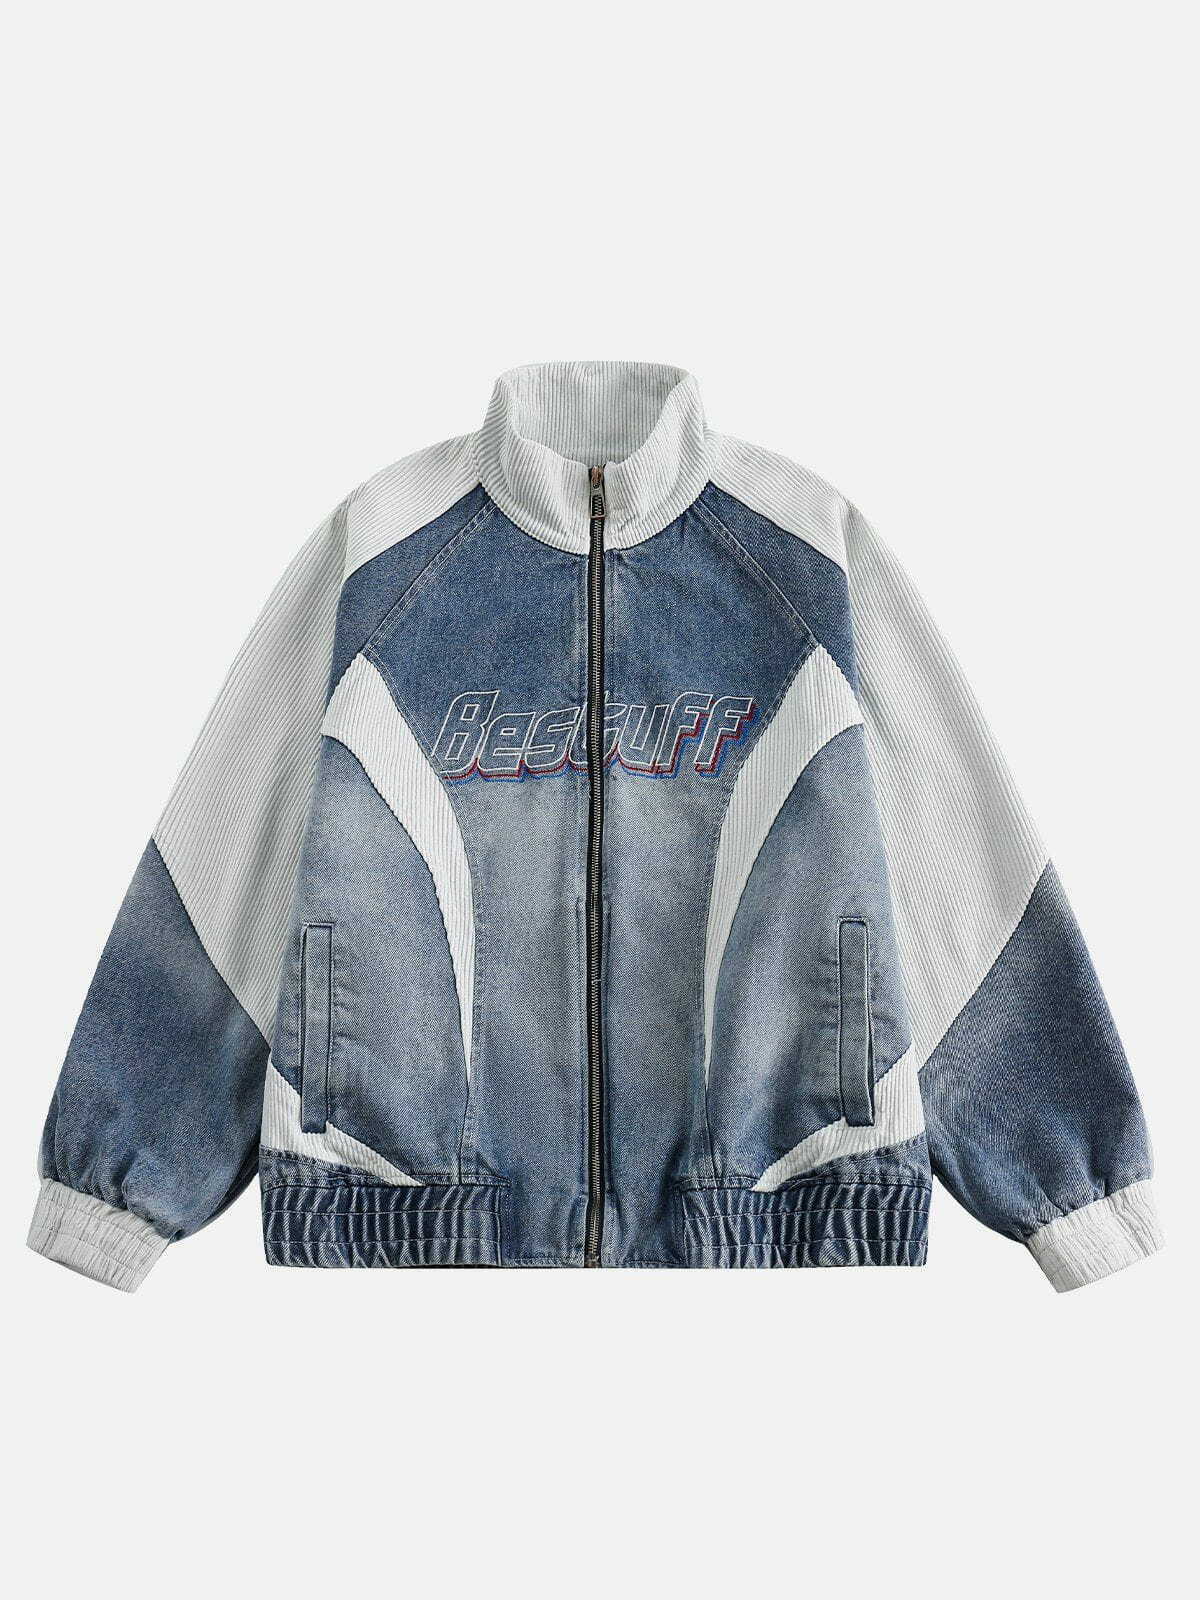 retro patchwork denim racing jacket edgy & vibrant streetwear 5710